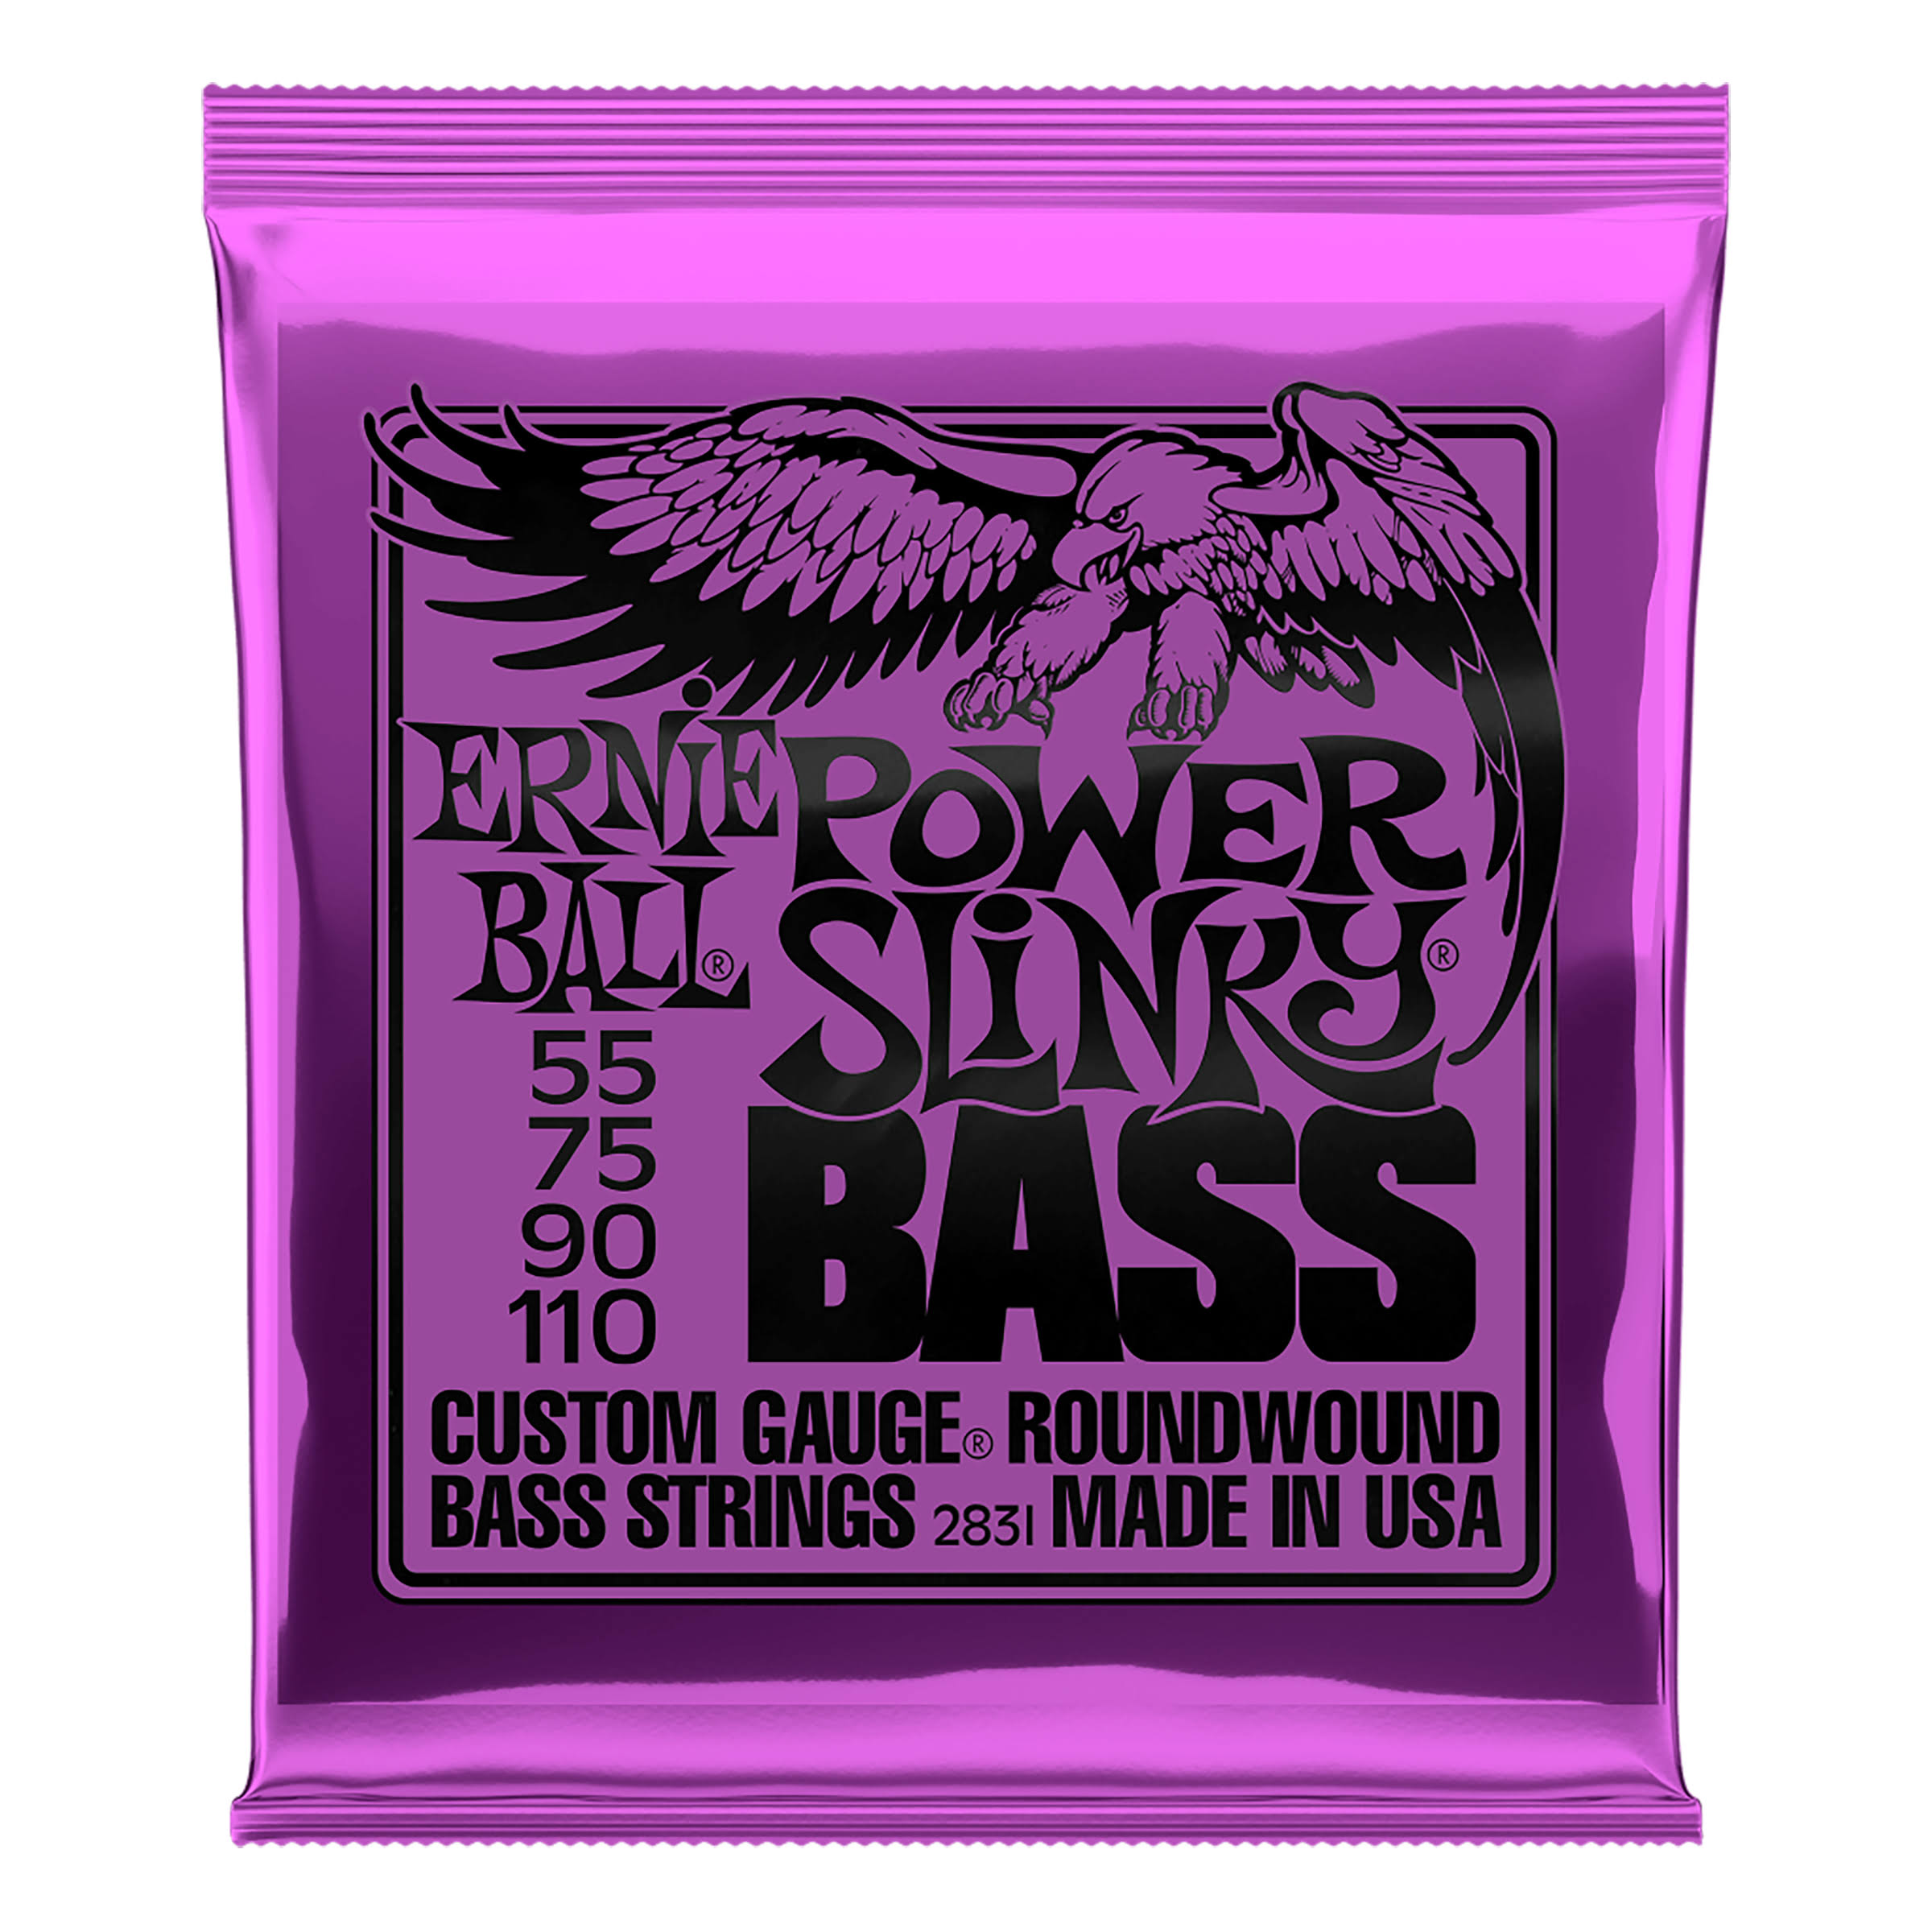 Ernie Ball Power Slinky Bass Guitar Strings